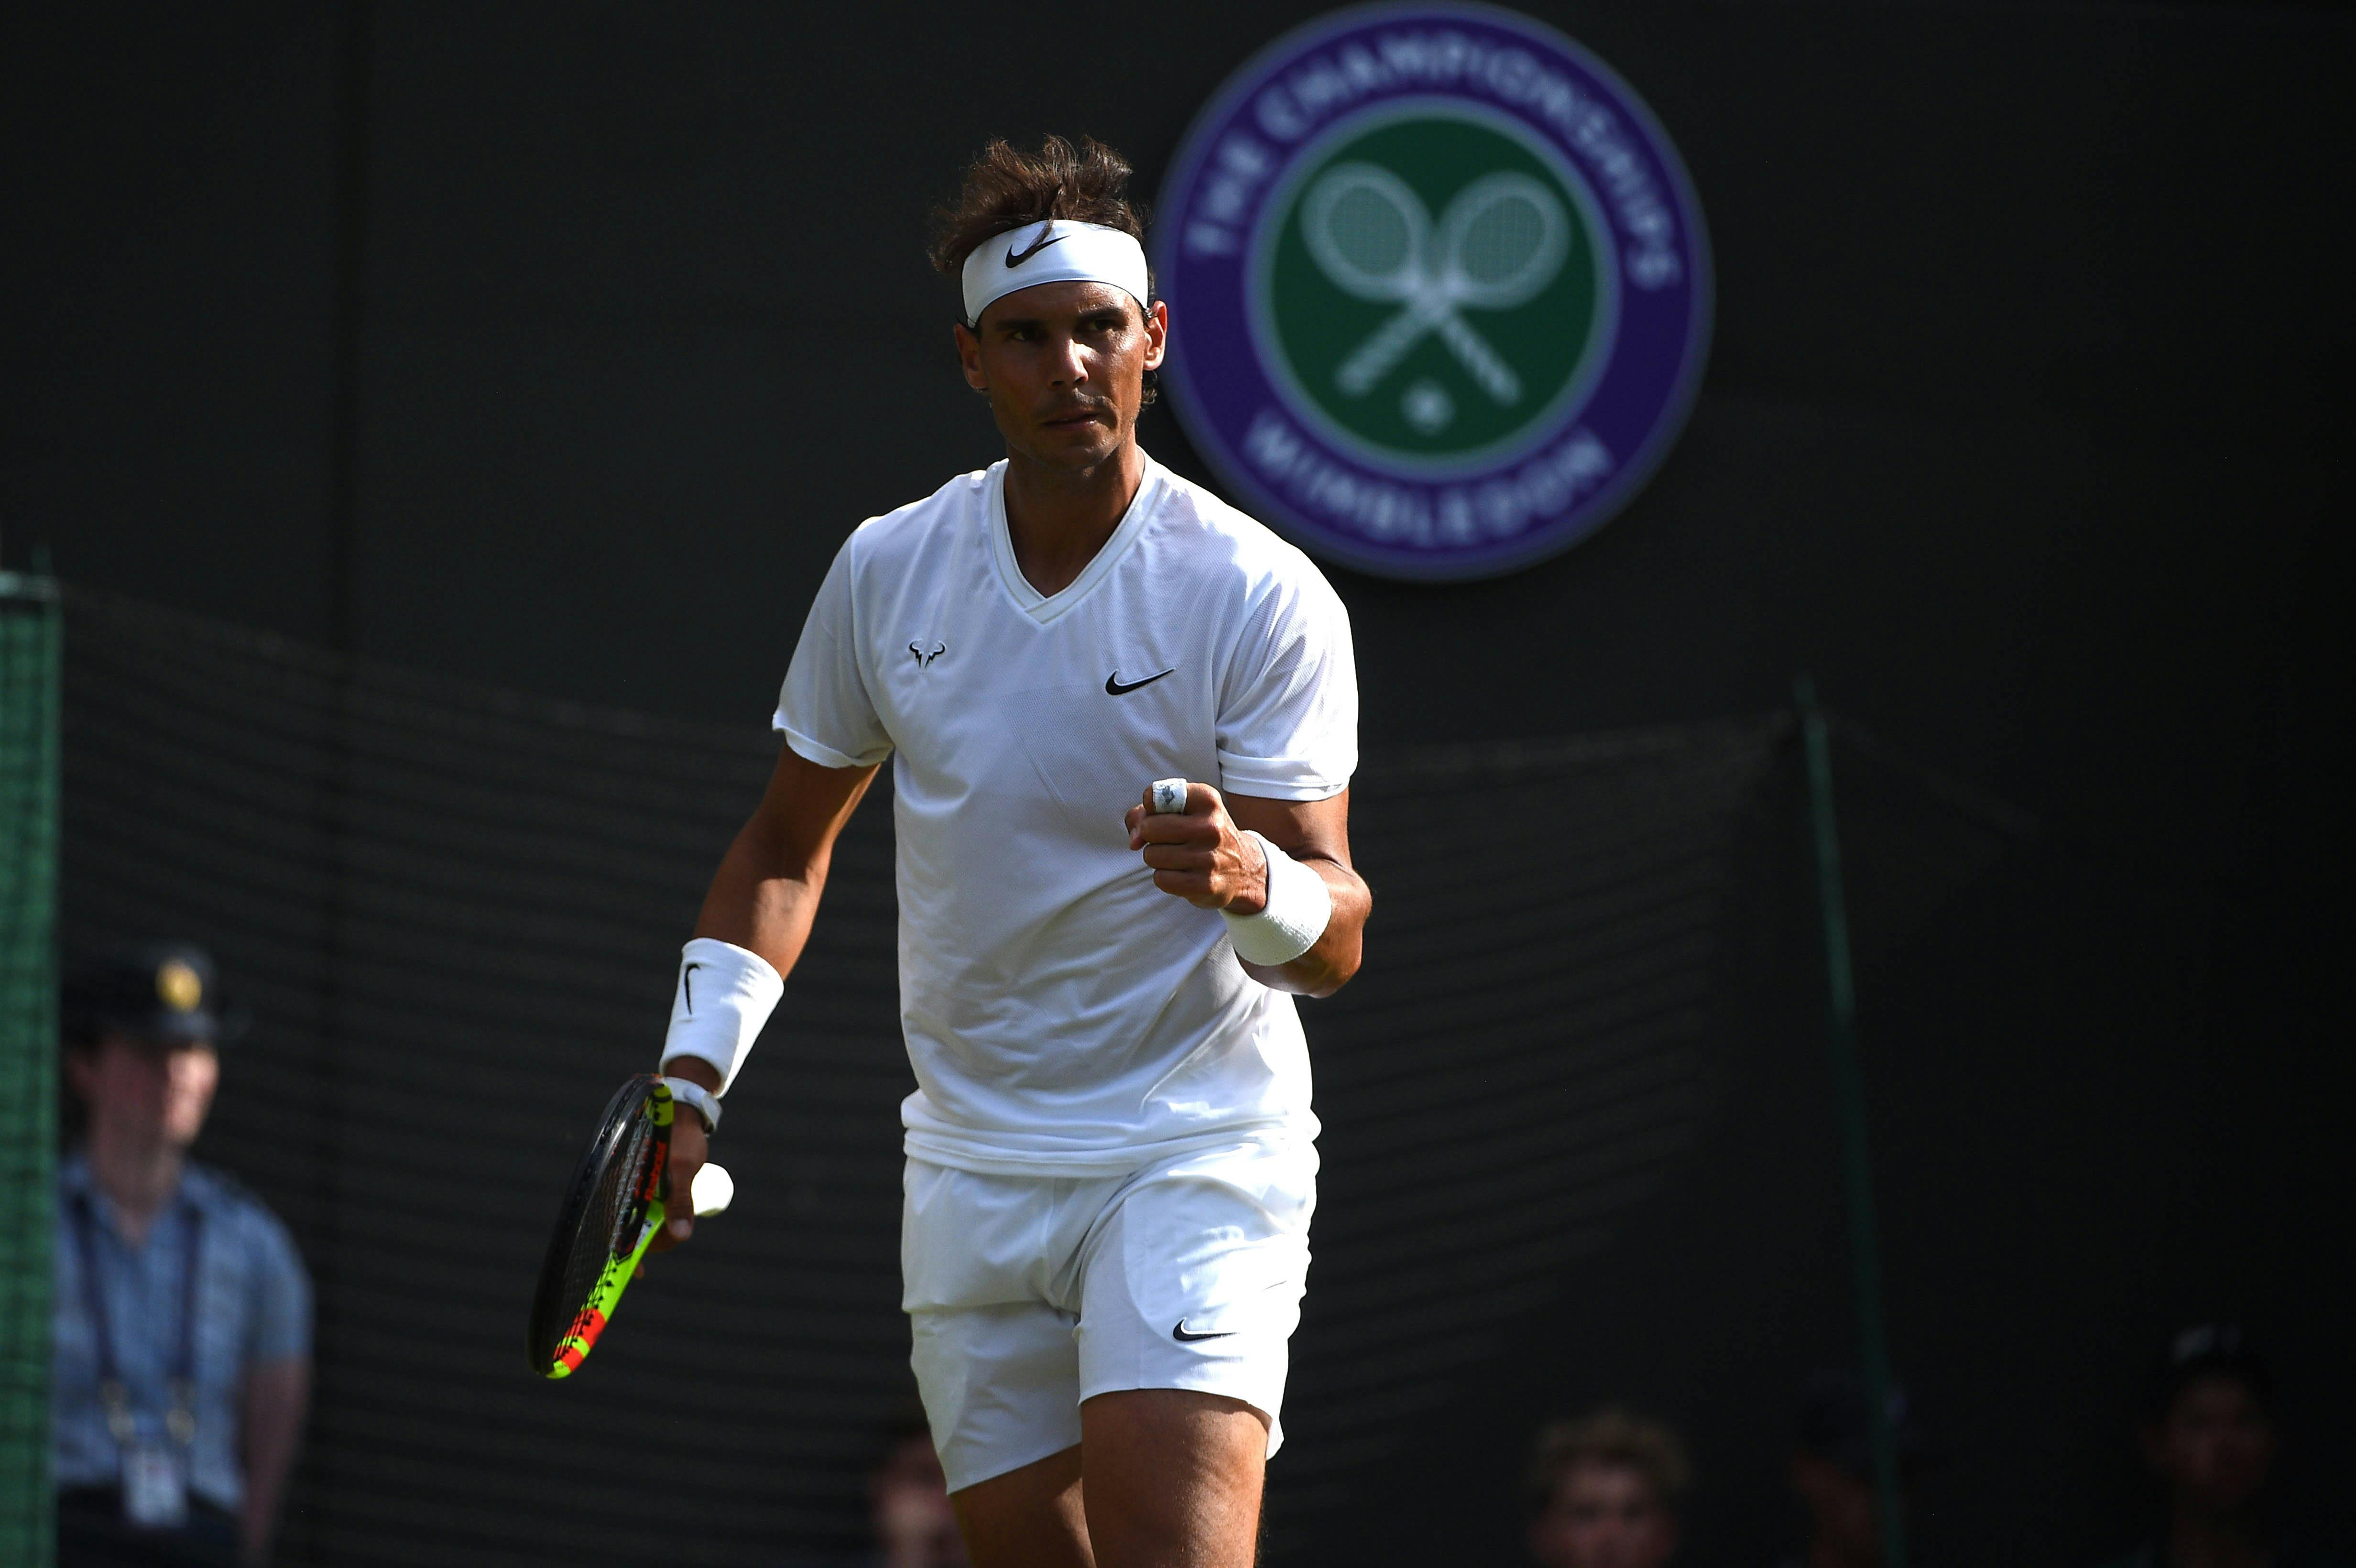 Rafael Nadal wins his first round at Wimbledon 2019